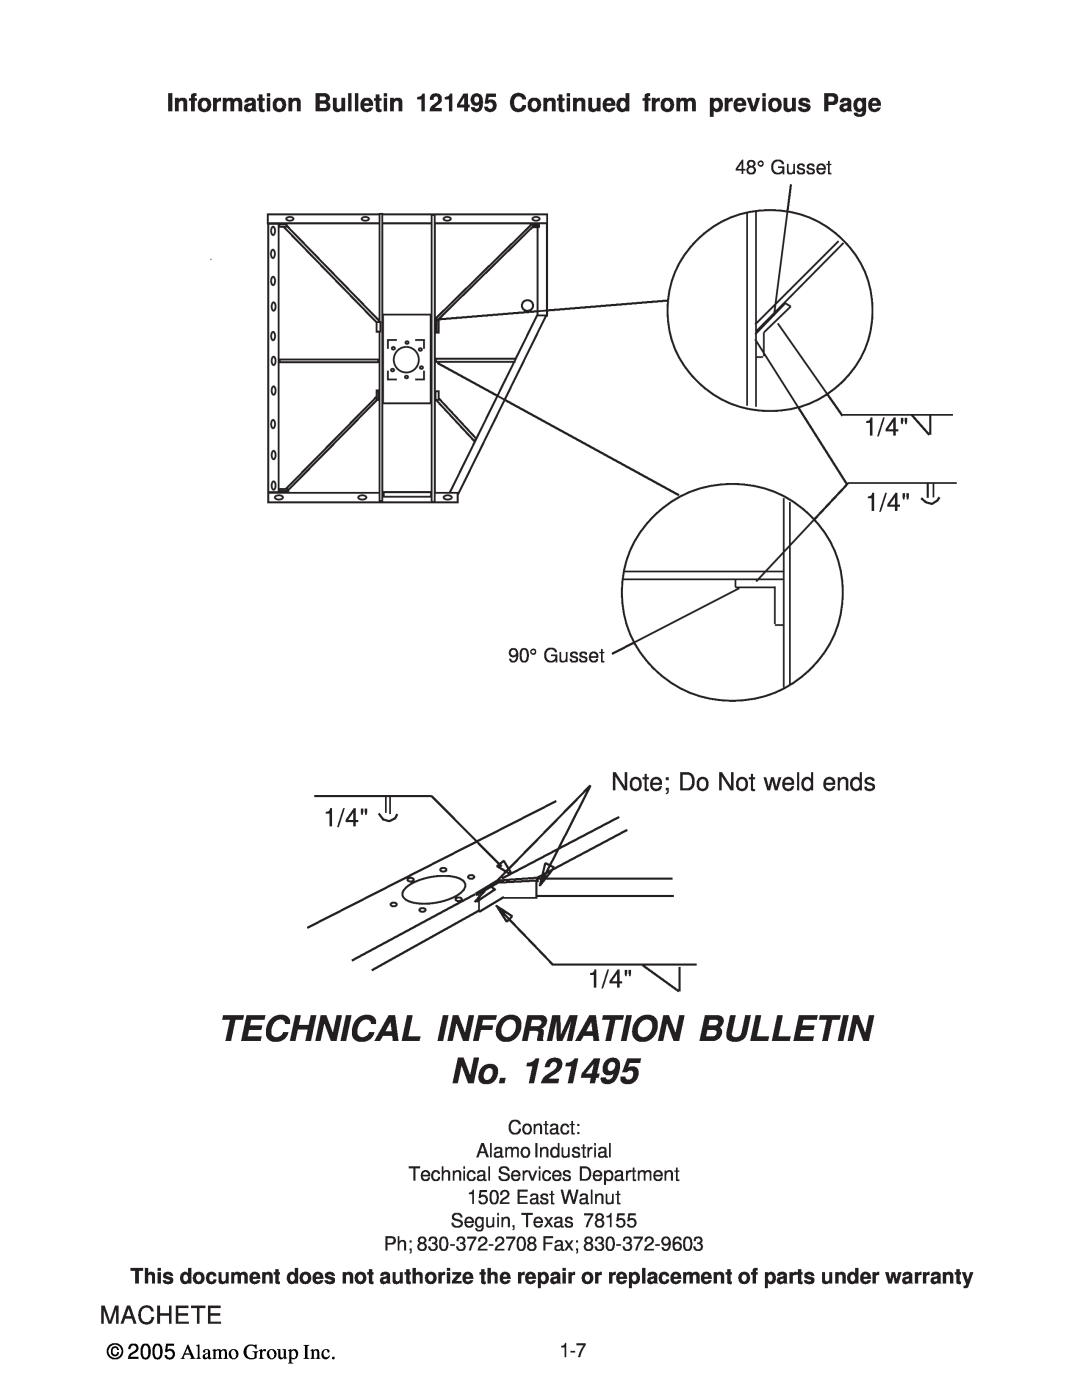 Alamo T 7740 manual Note; Do Not weld ends 1/4 1/4, TECHNICAL INFORMATION BULLETIN No, Machete, Alamo Group Inc 